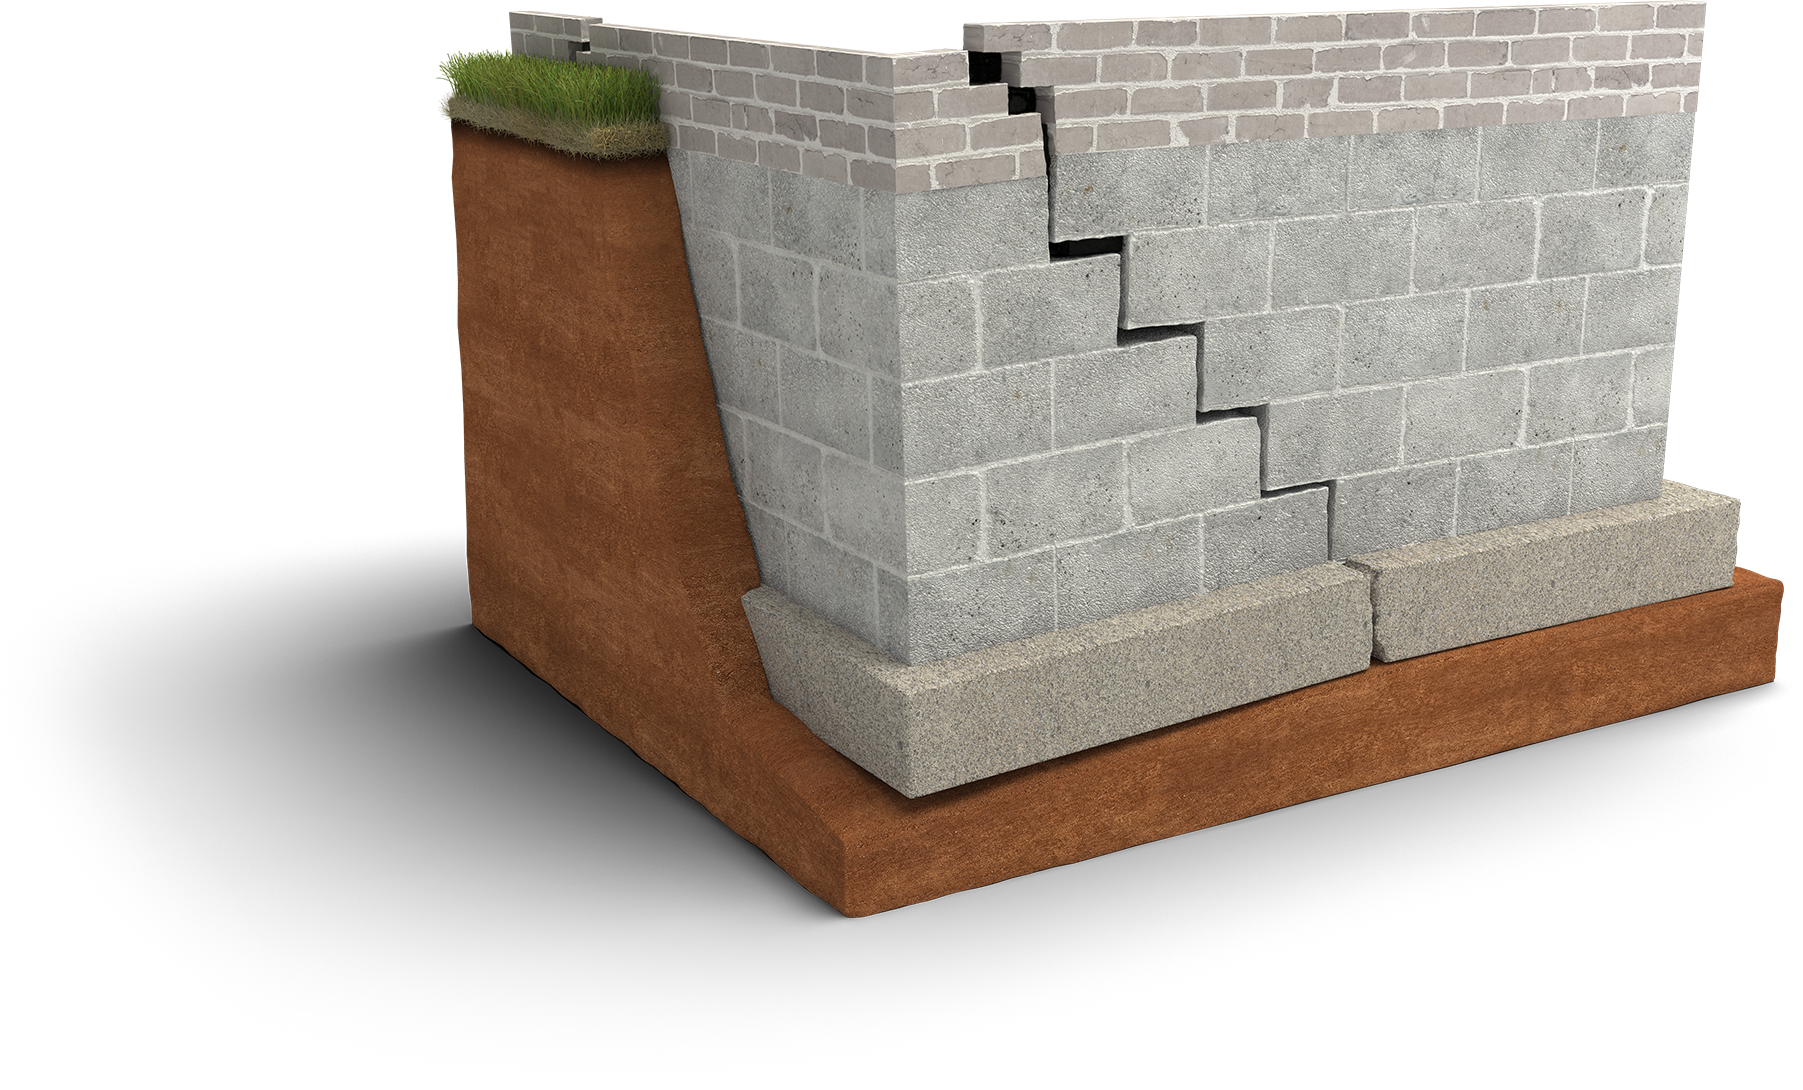 Cracked Brick Walls | Wall Crack Repair